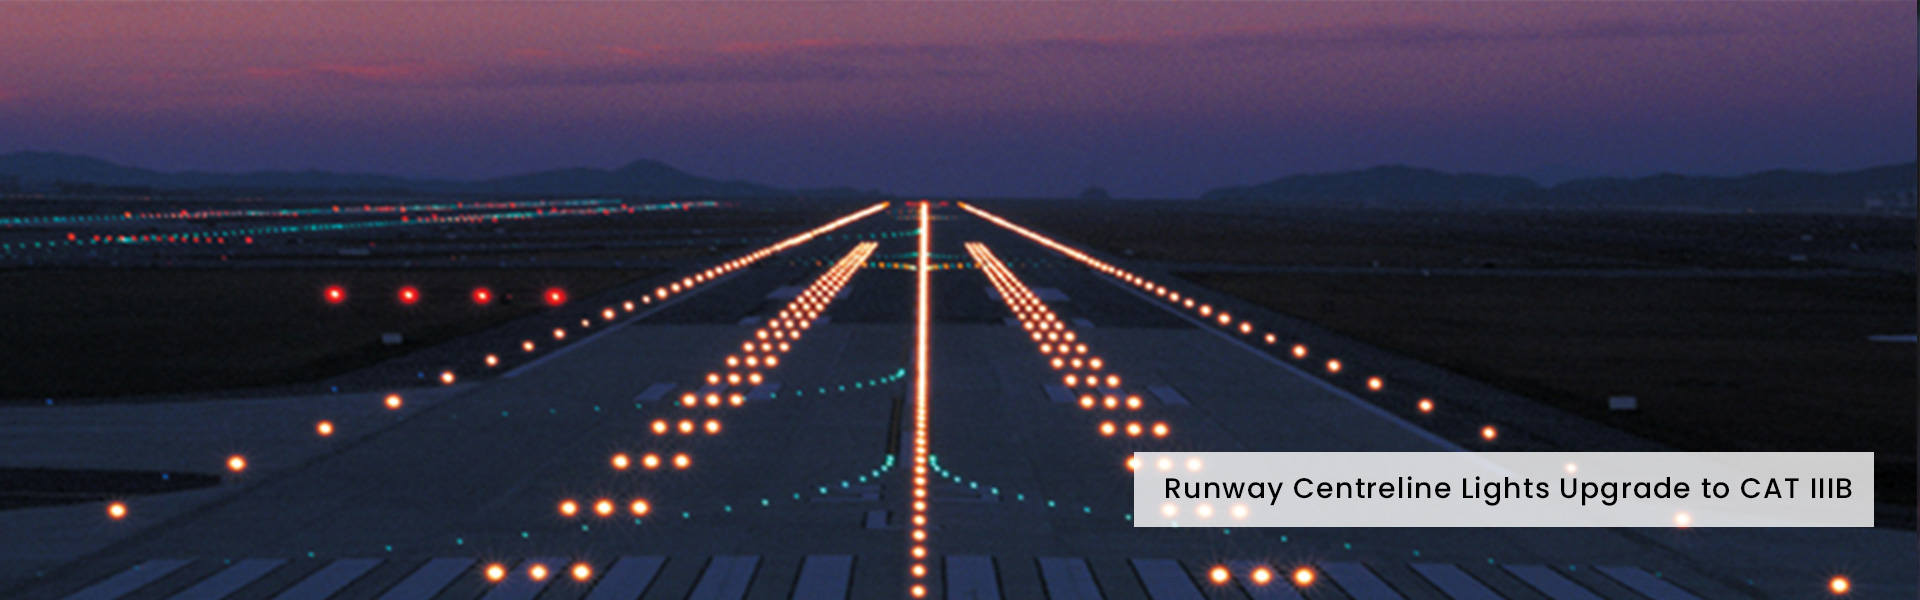 Runway-Centreline-Lights-Upgrade-to-CAT-IIIB